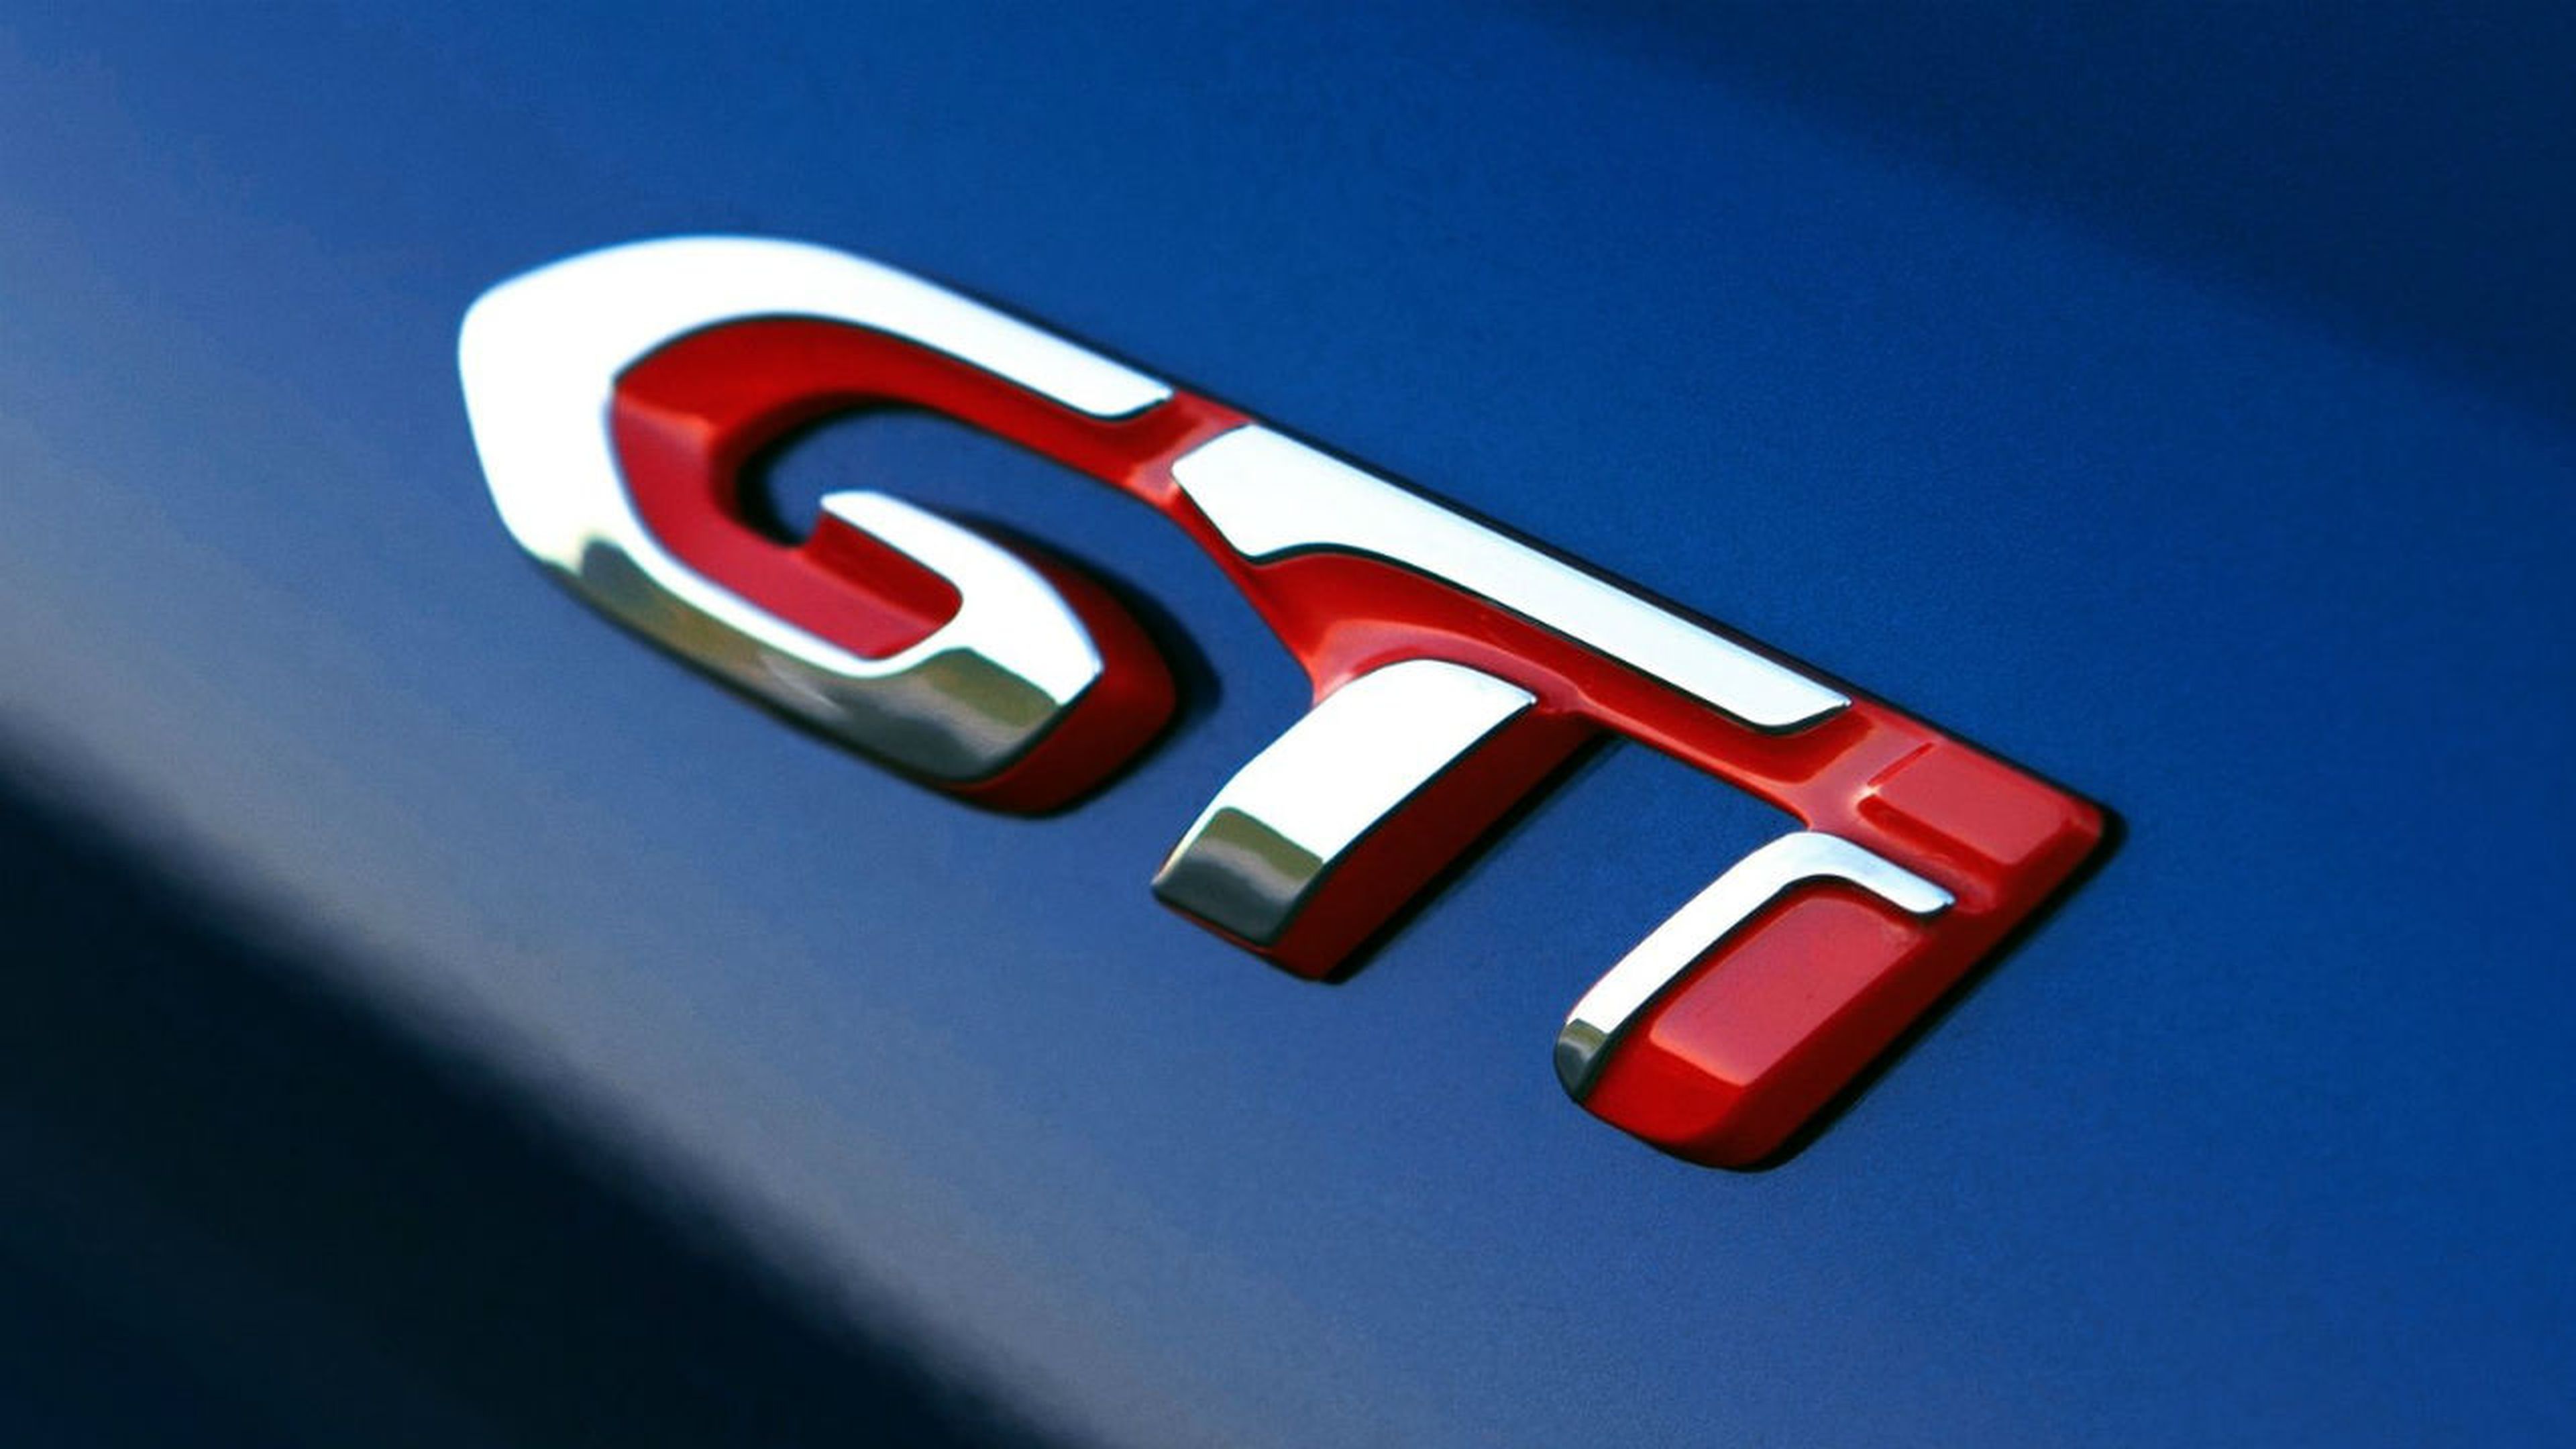 Peugeot GTi